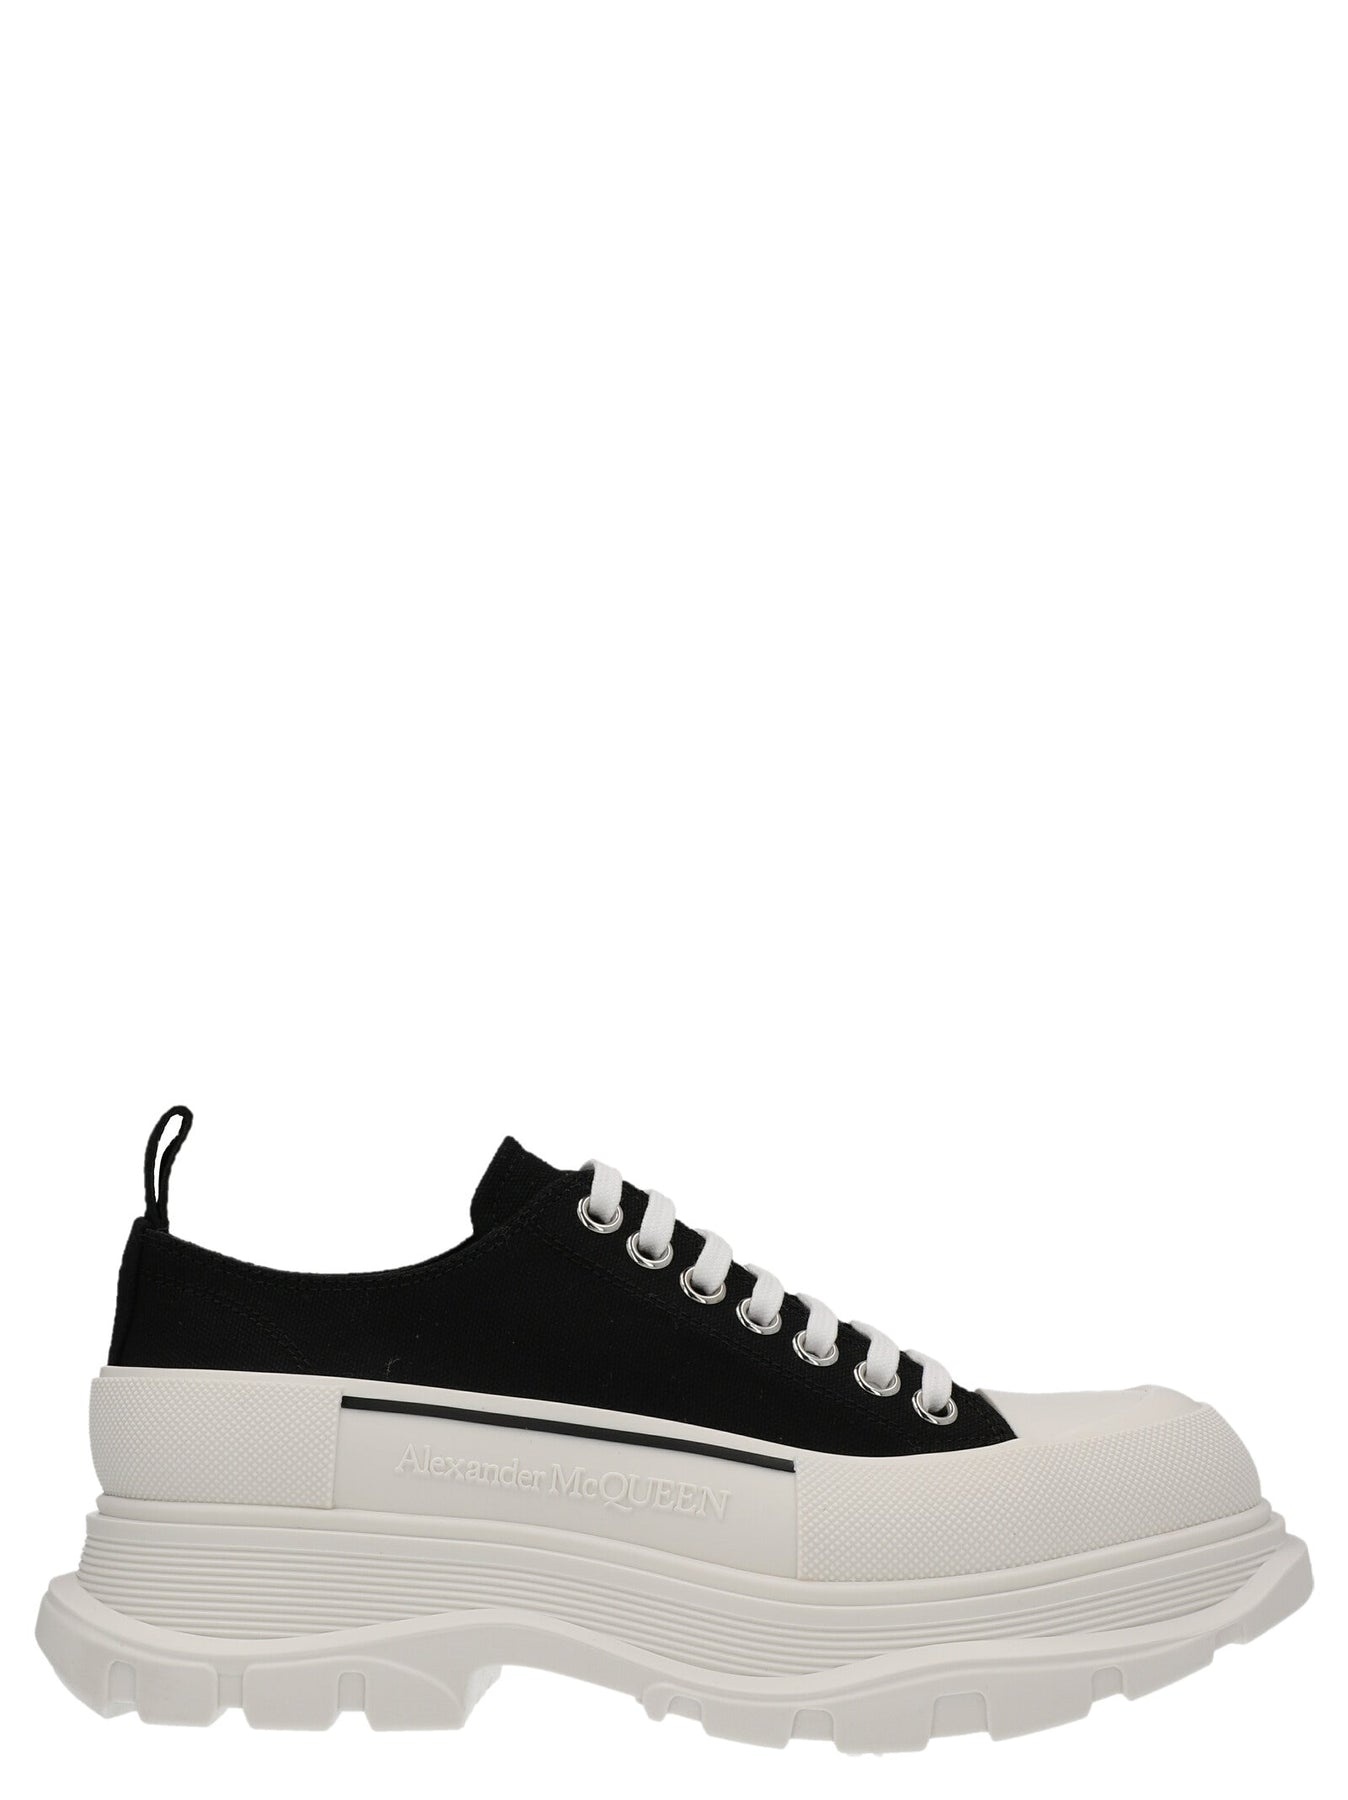 Oversize Sole Sneakers White/Black - 1